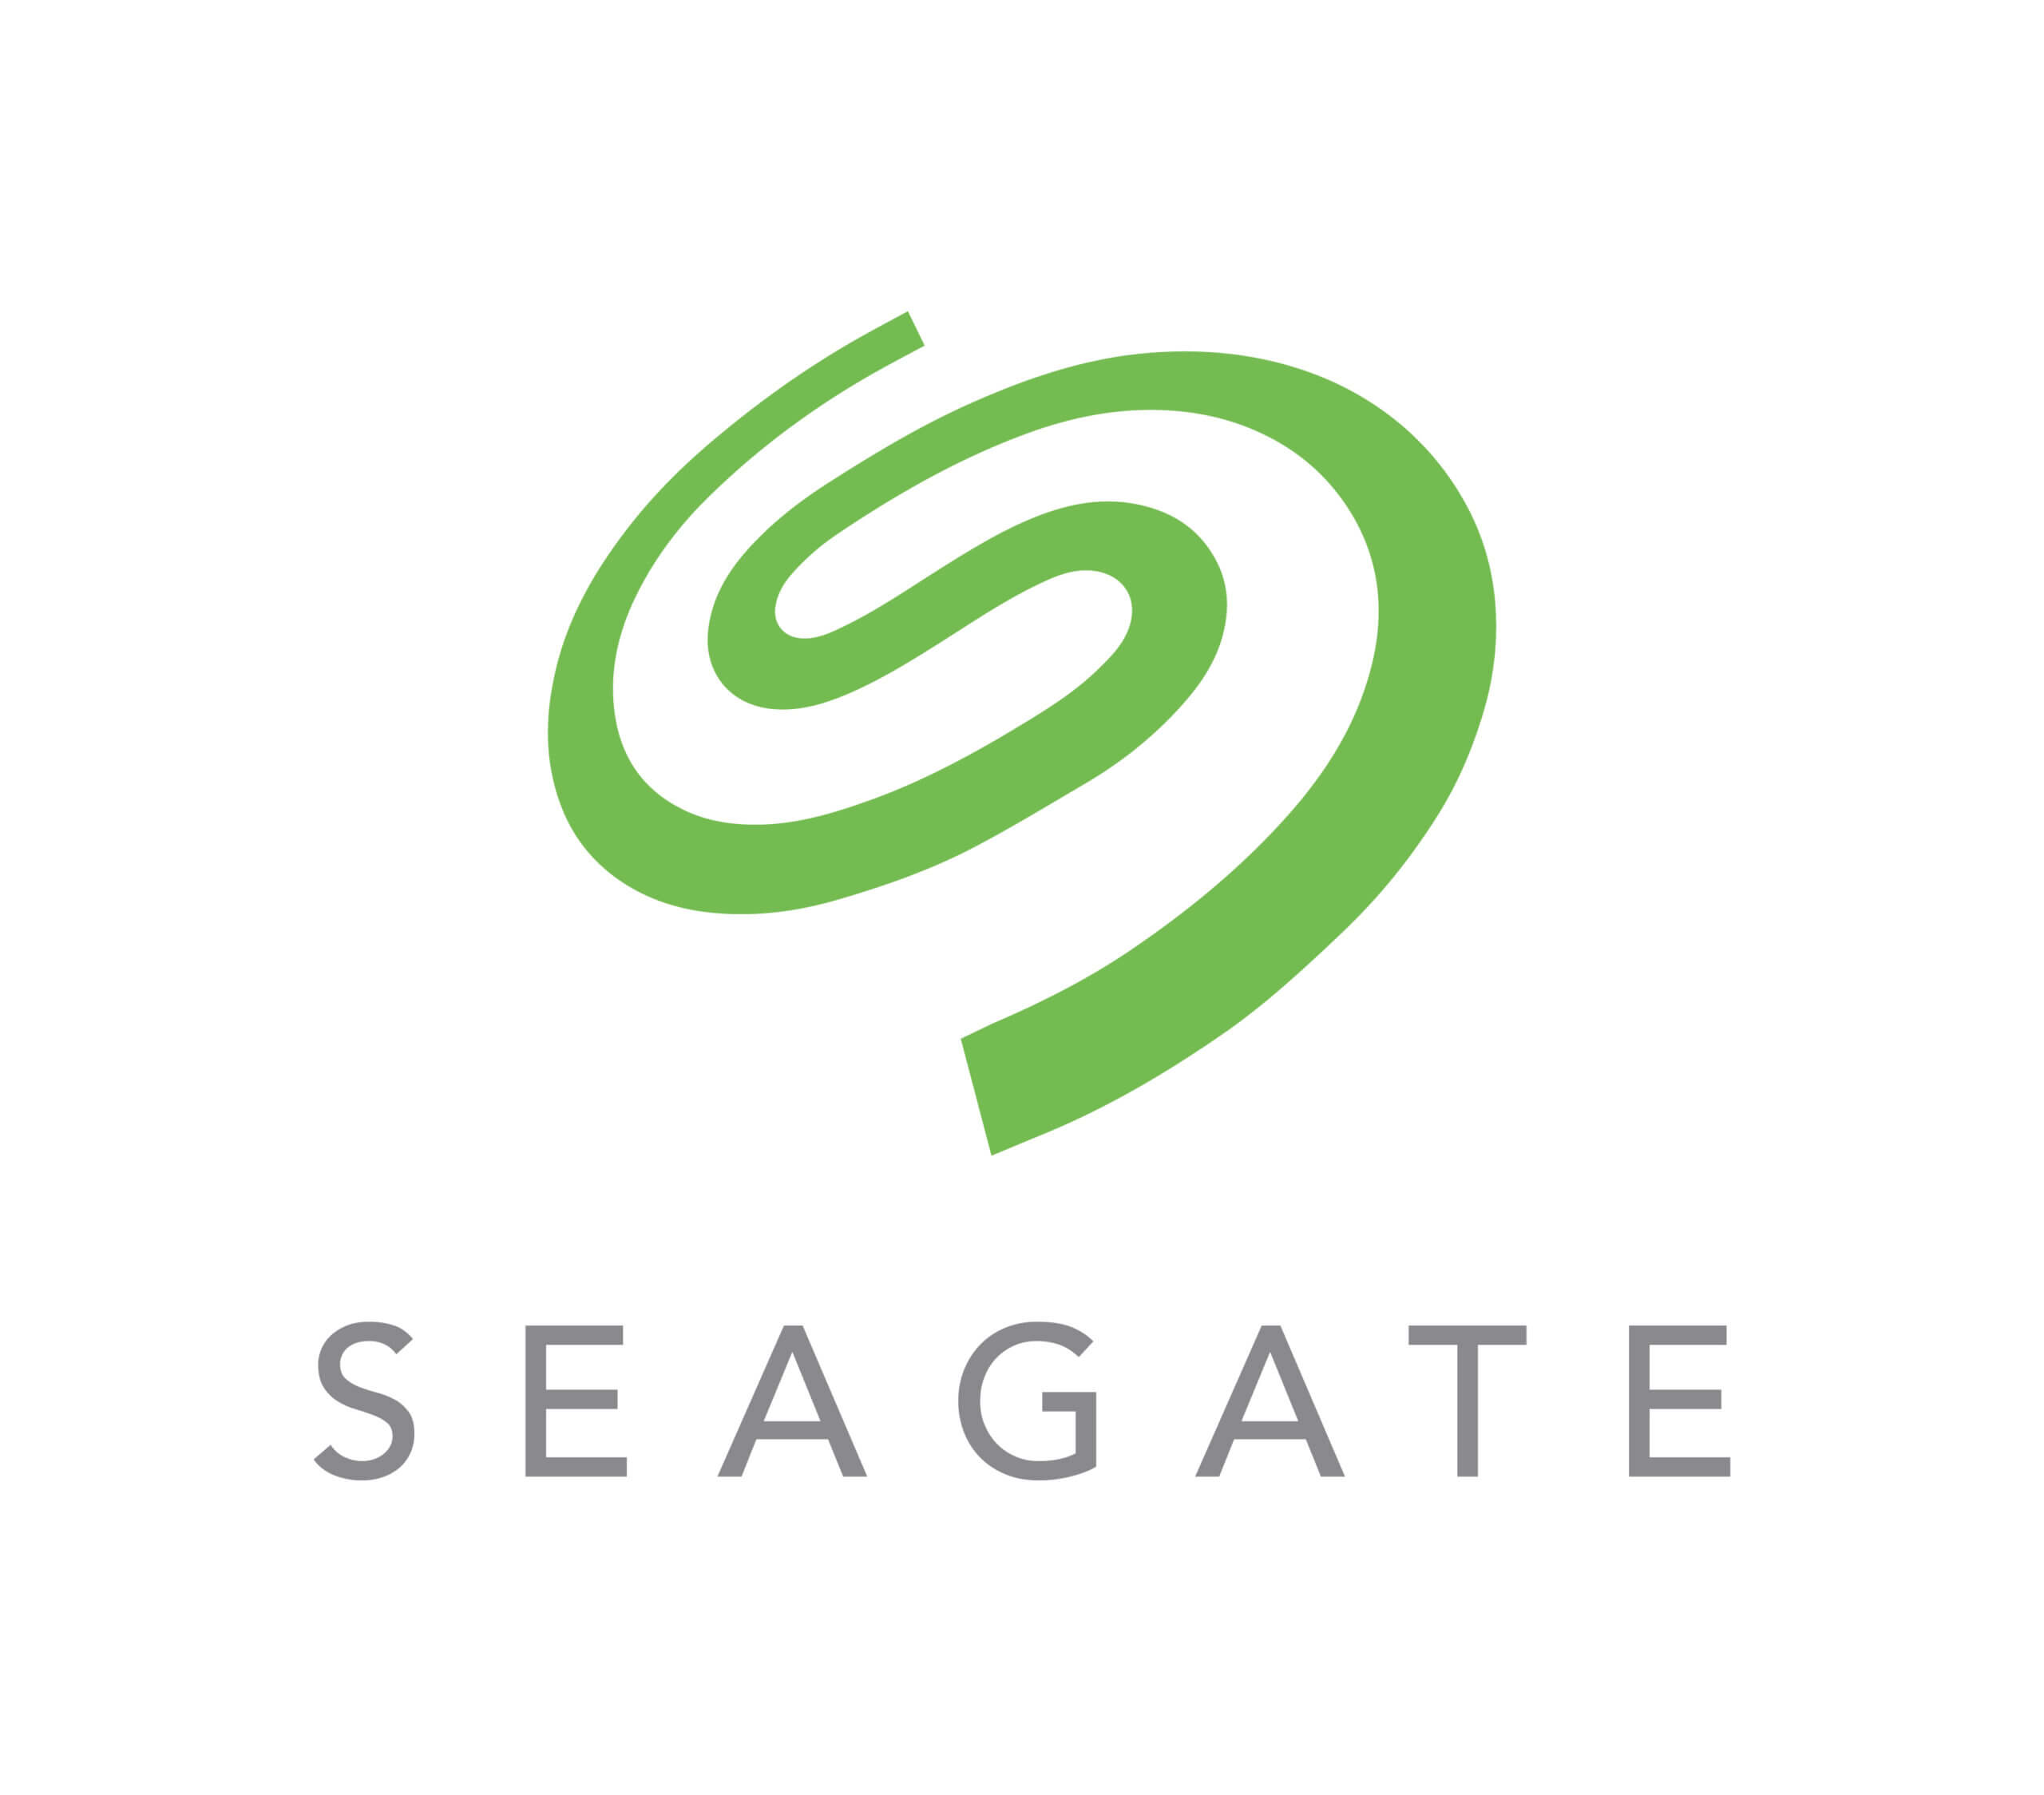 Green spiral Seagate logo